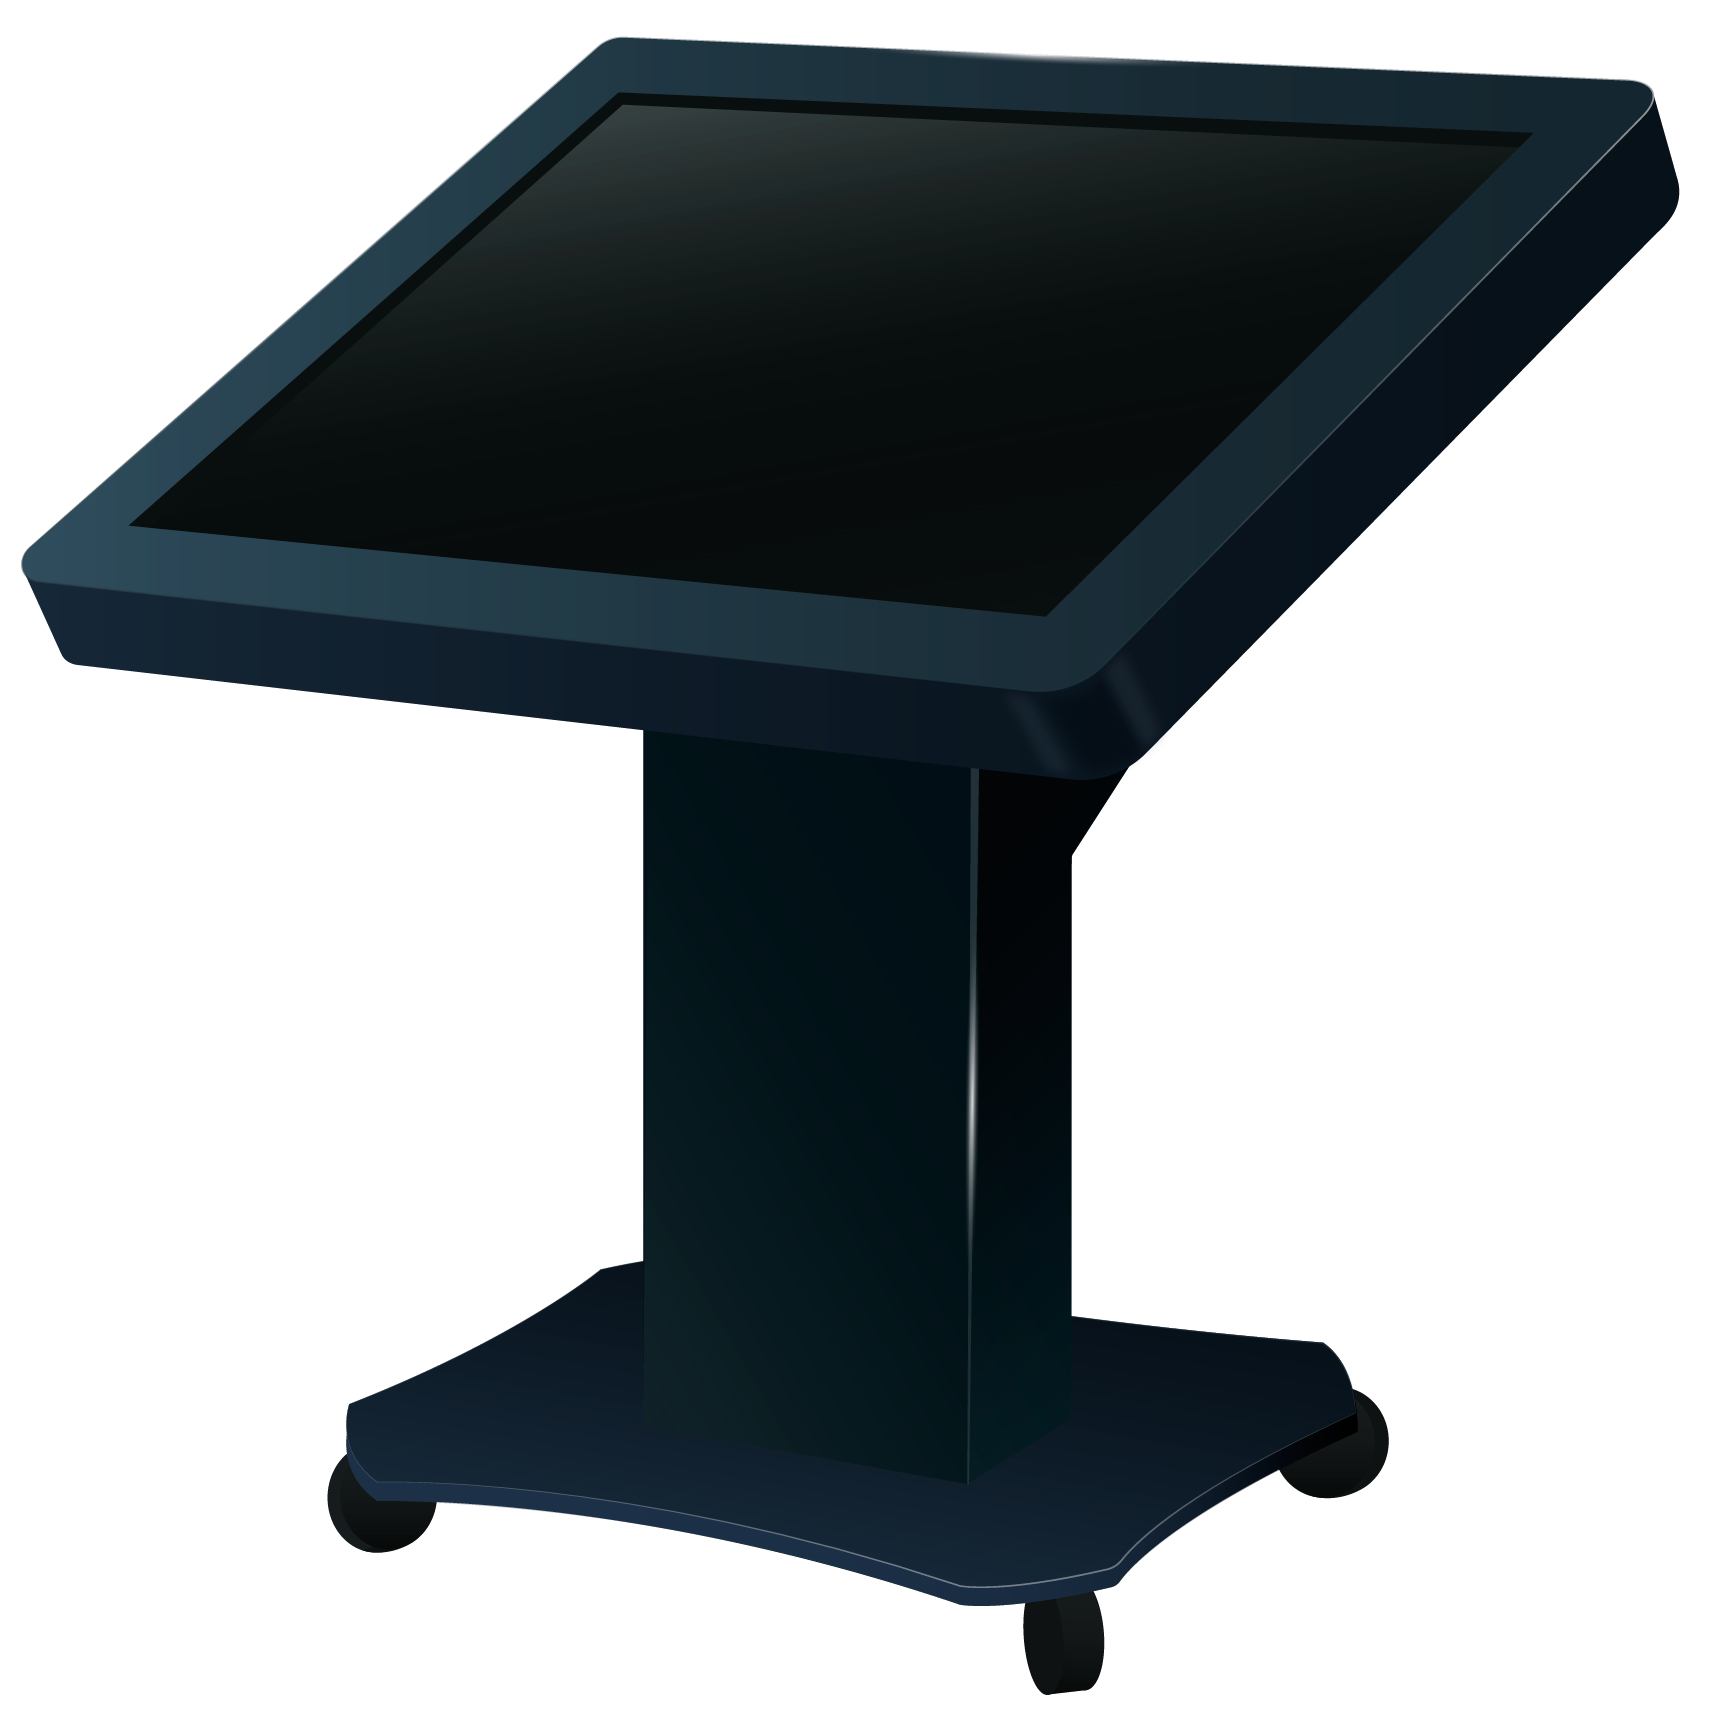 Интерактивный стол SKY 360 диагональ экрана 55 дюйма